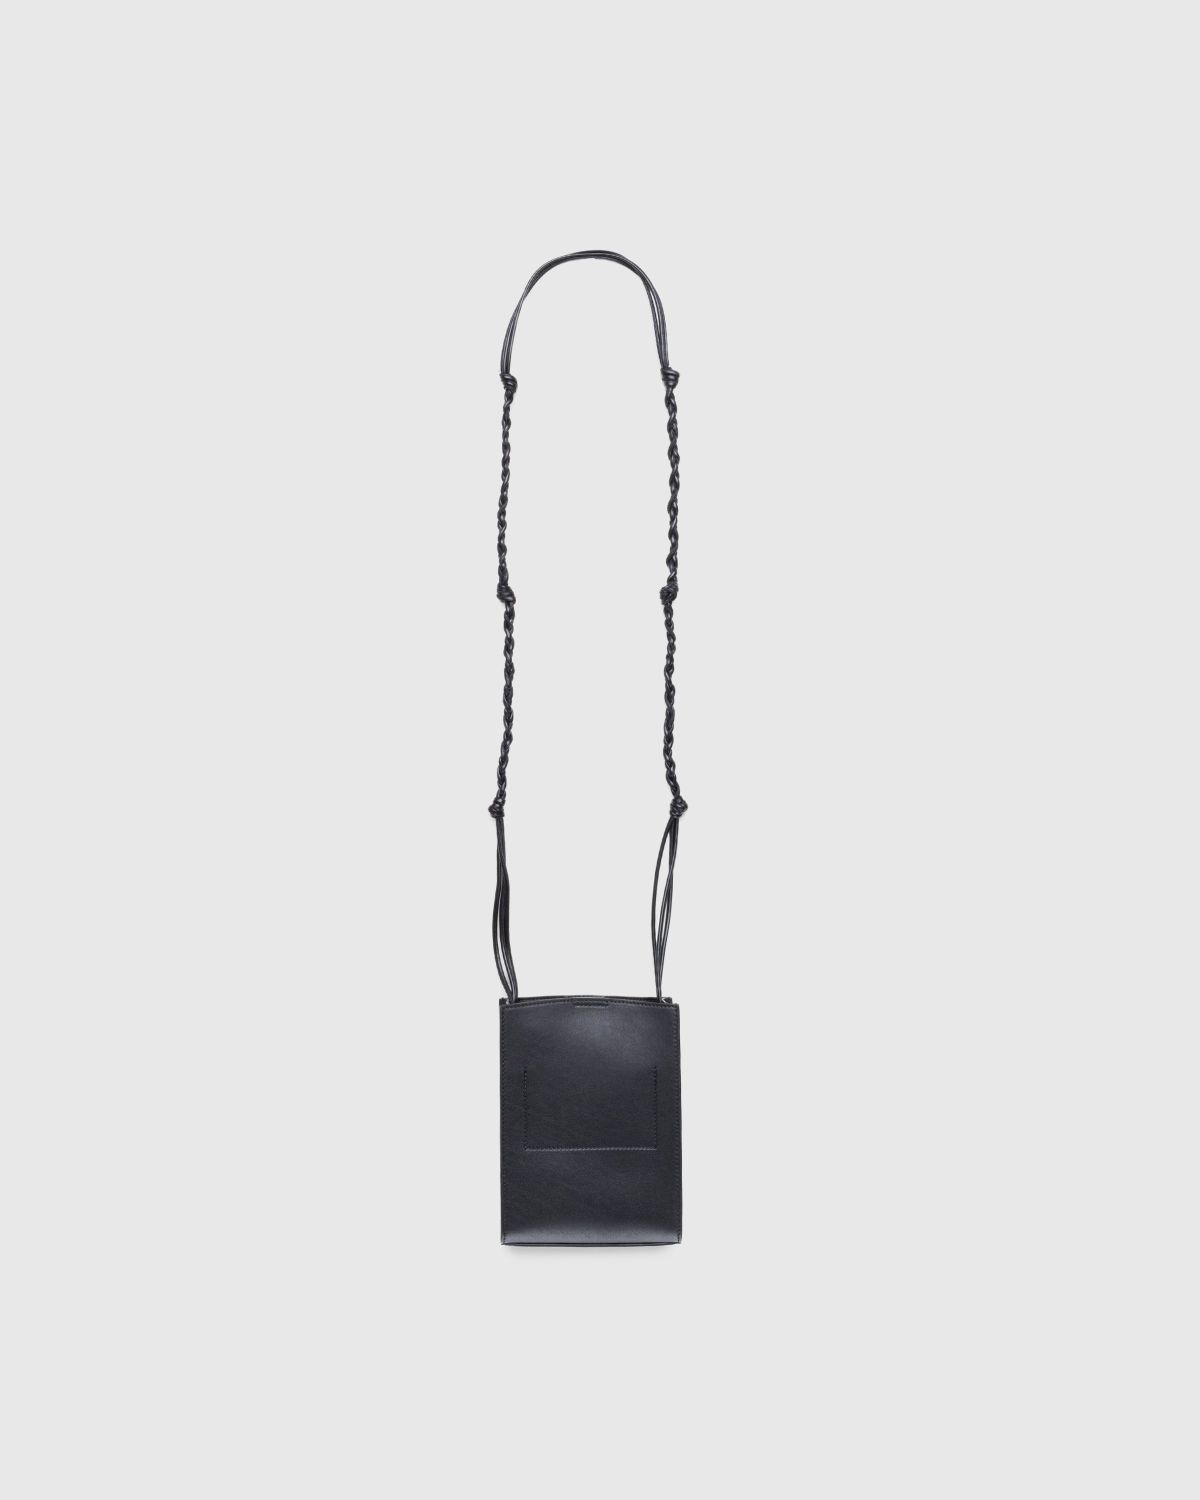 Jil Sander – Tangle Small Bag Black